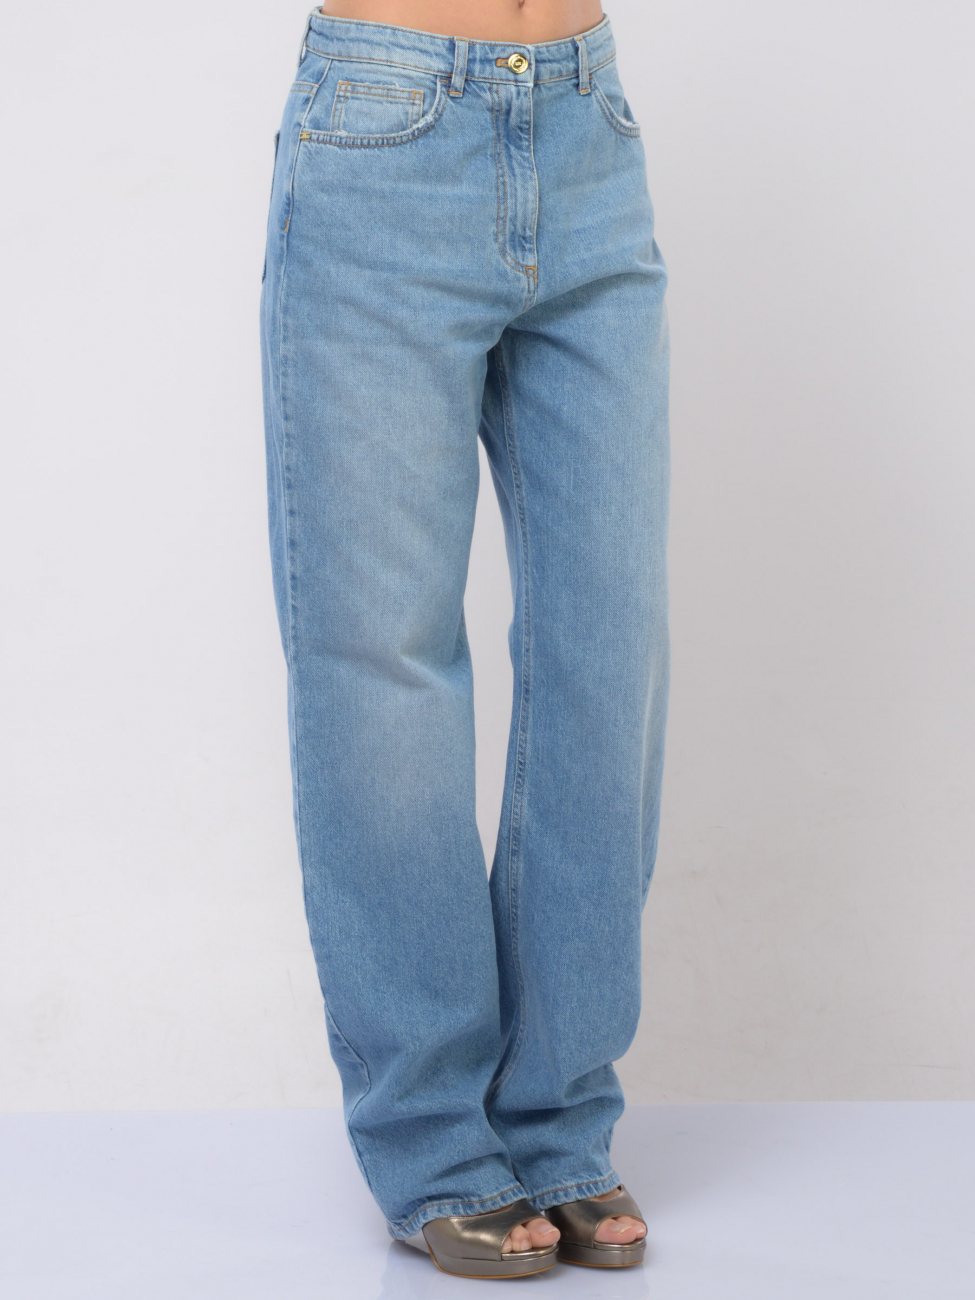 jeans da donna Elisabetta Franchi gamba dritta con logo